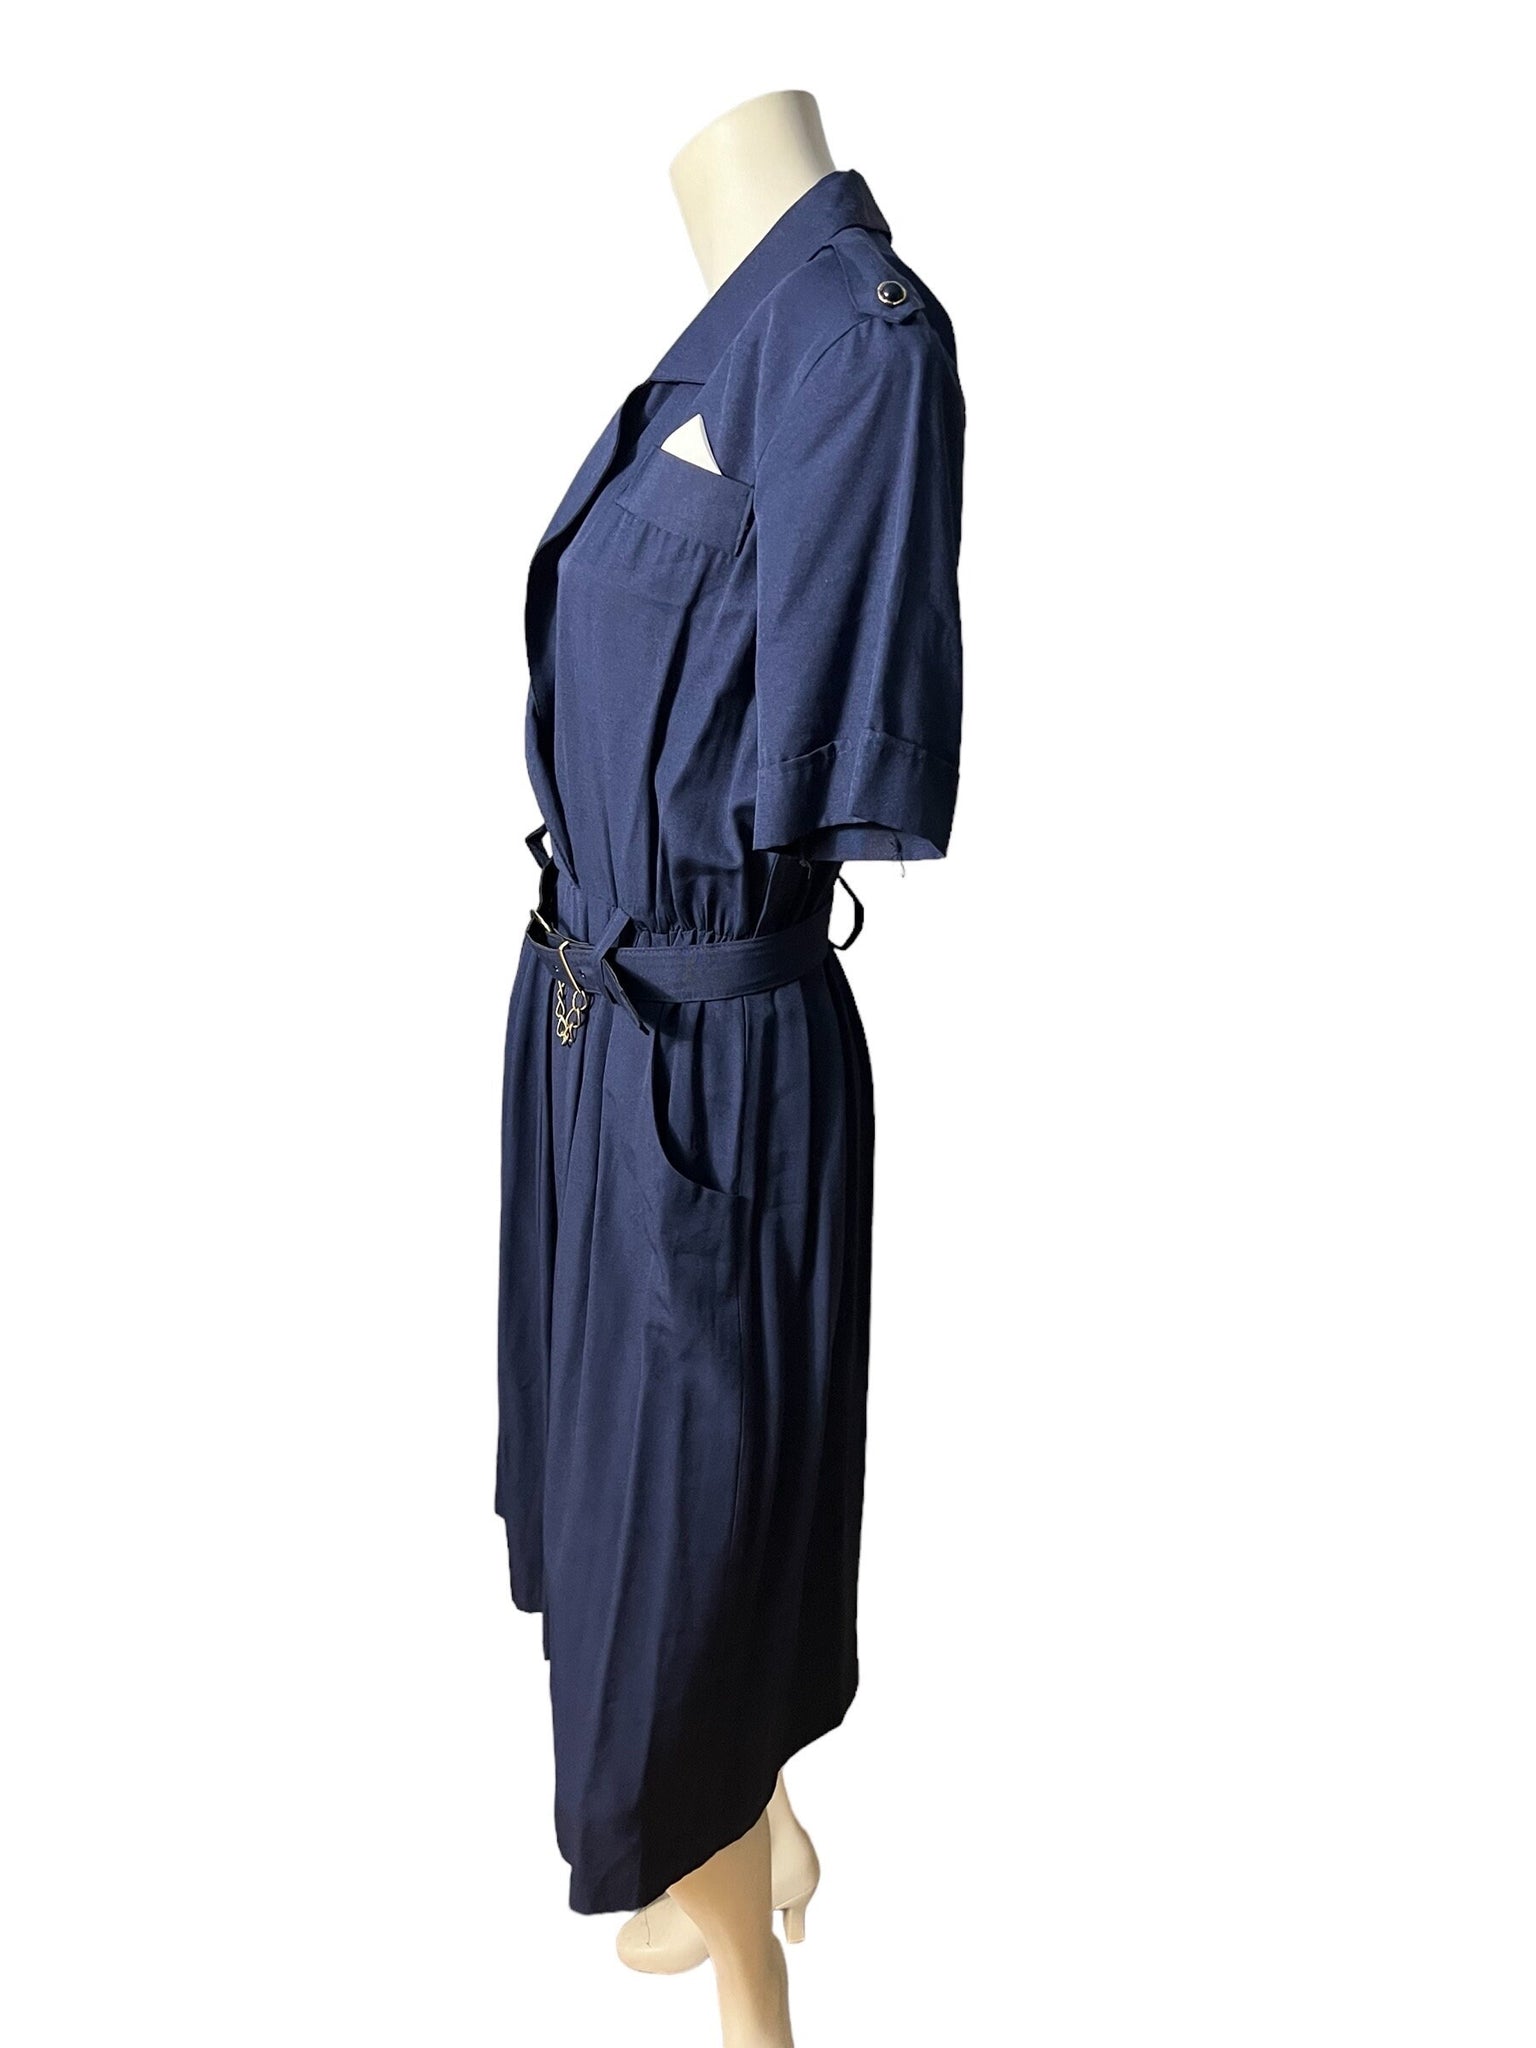 Vintage 80’s blue dress 10 M Breli Original